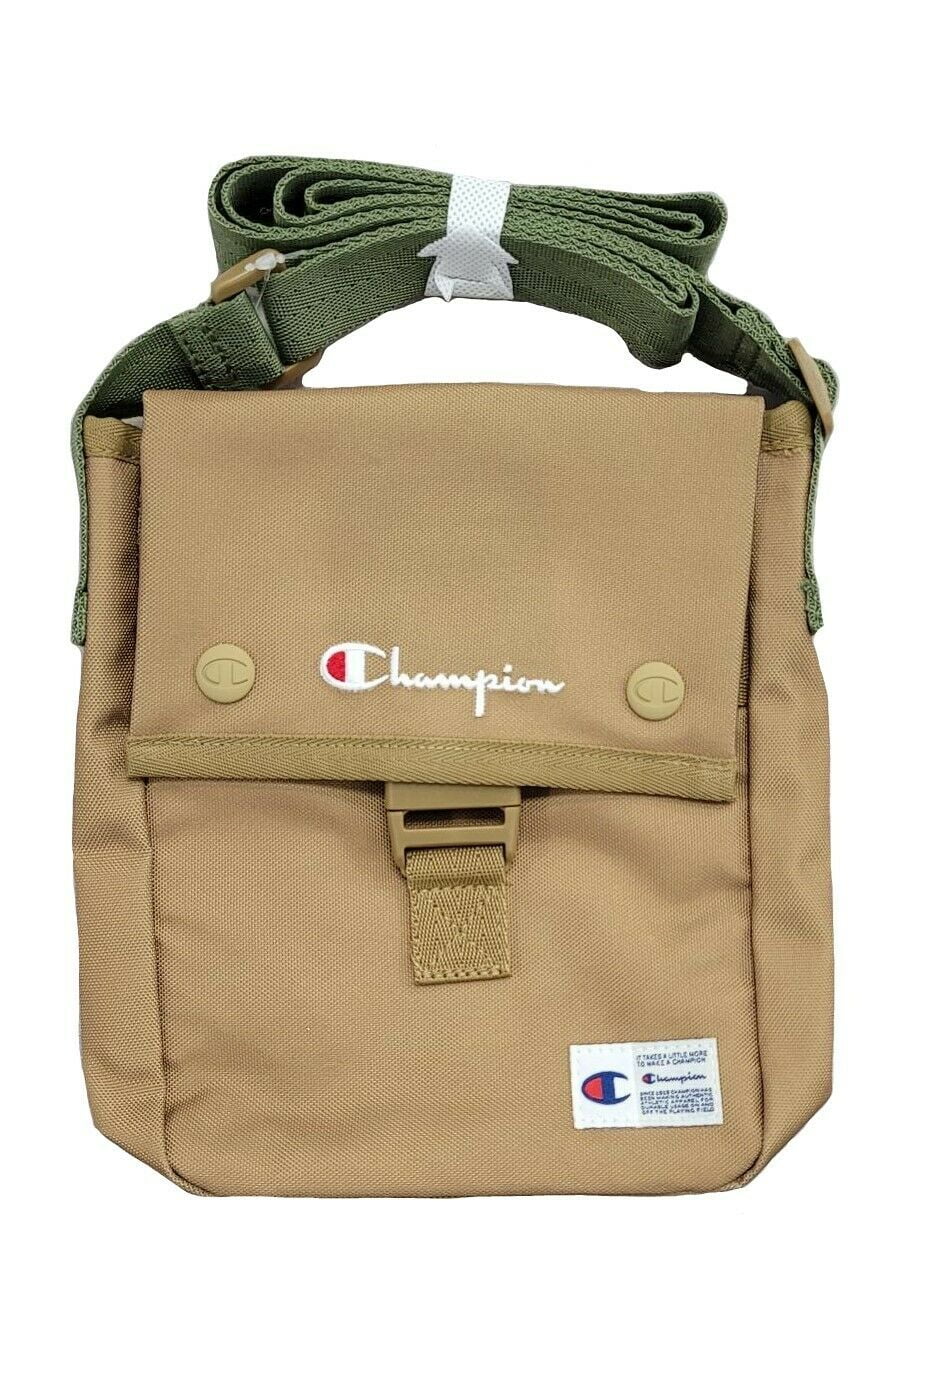 Champion Lifeline Crossbody Bag One Size Khaki/Olive CM2-0767 - Walmart.com